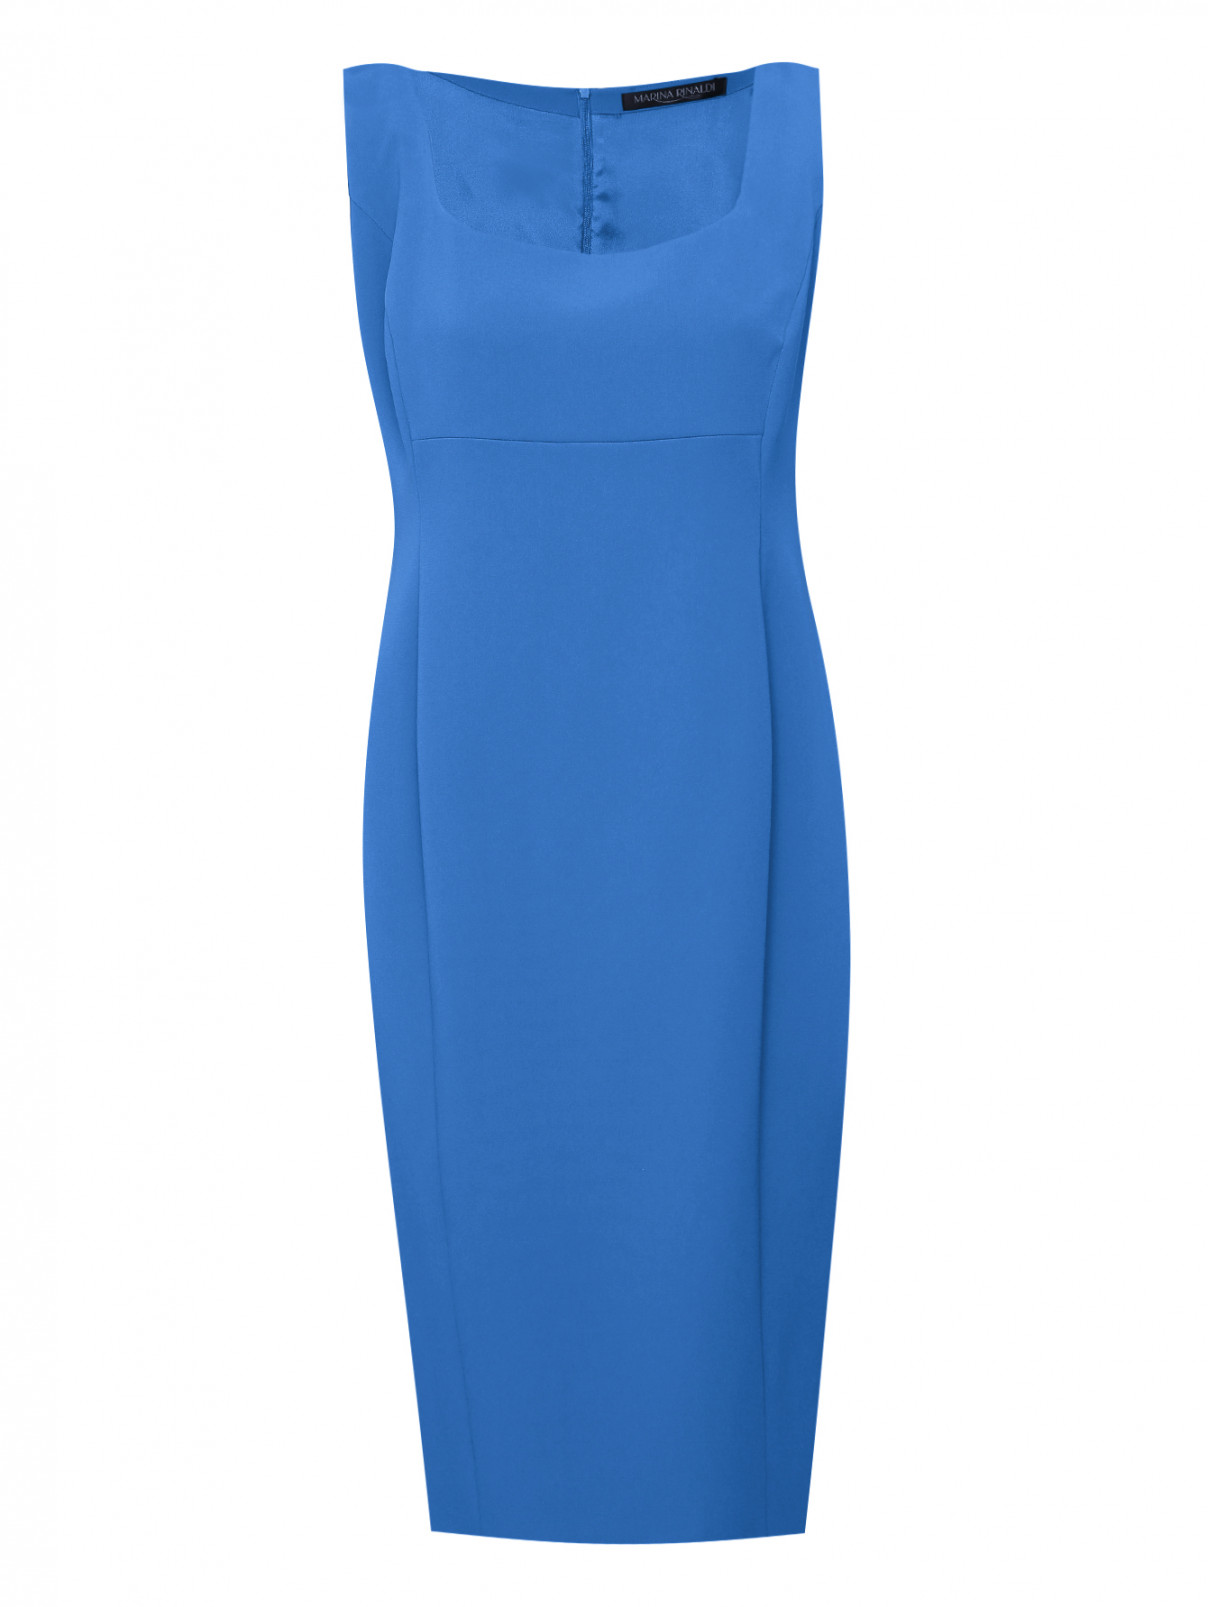 Платье-футляр без рукавов Marina Rinaldi  –  Общий вид  – Цвет:  Синий